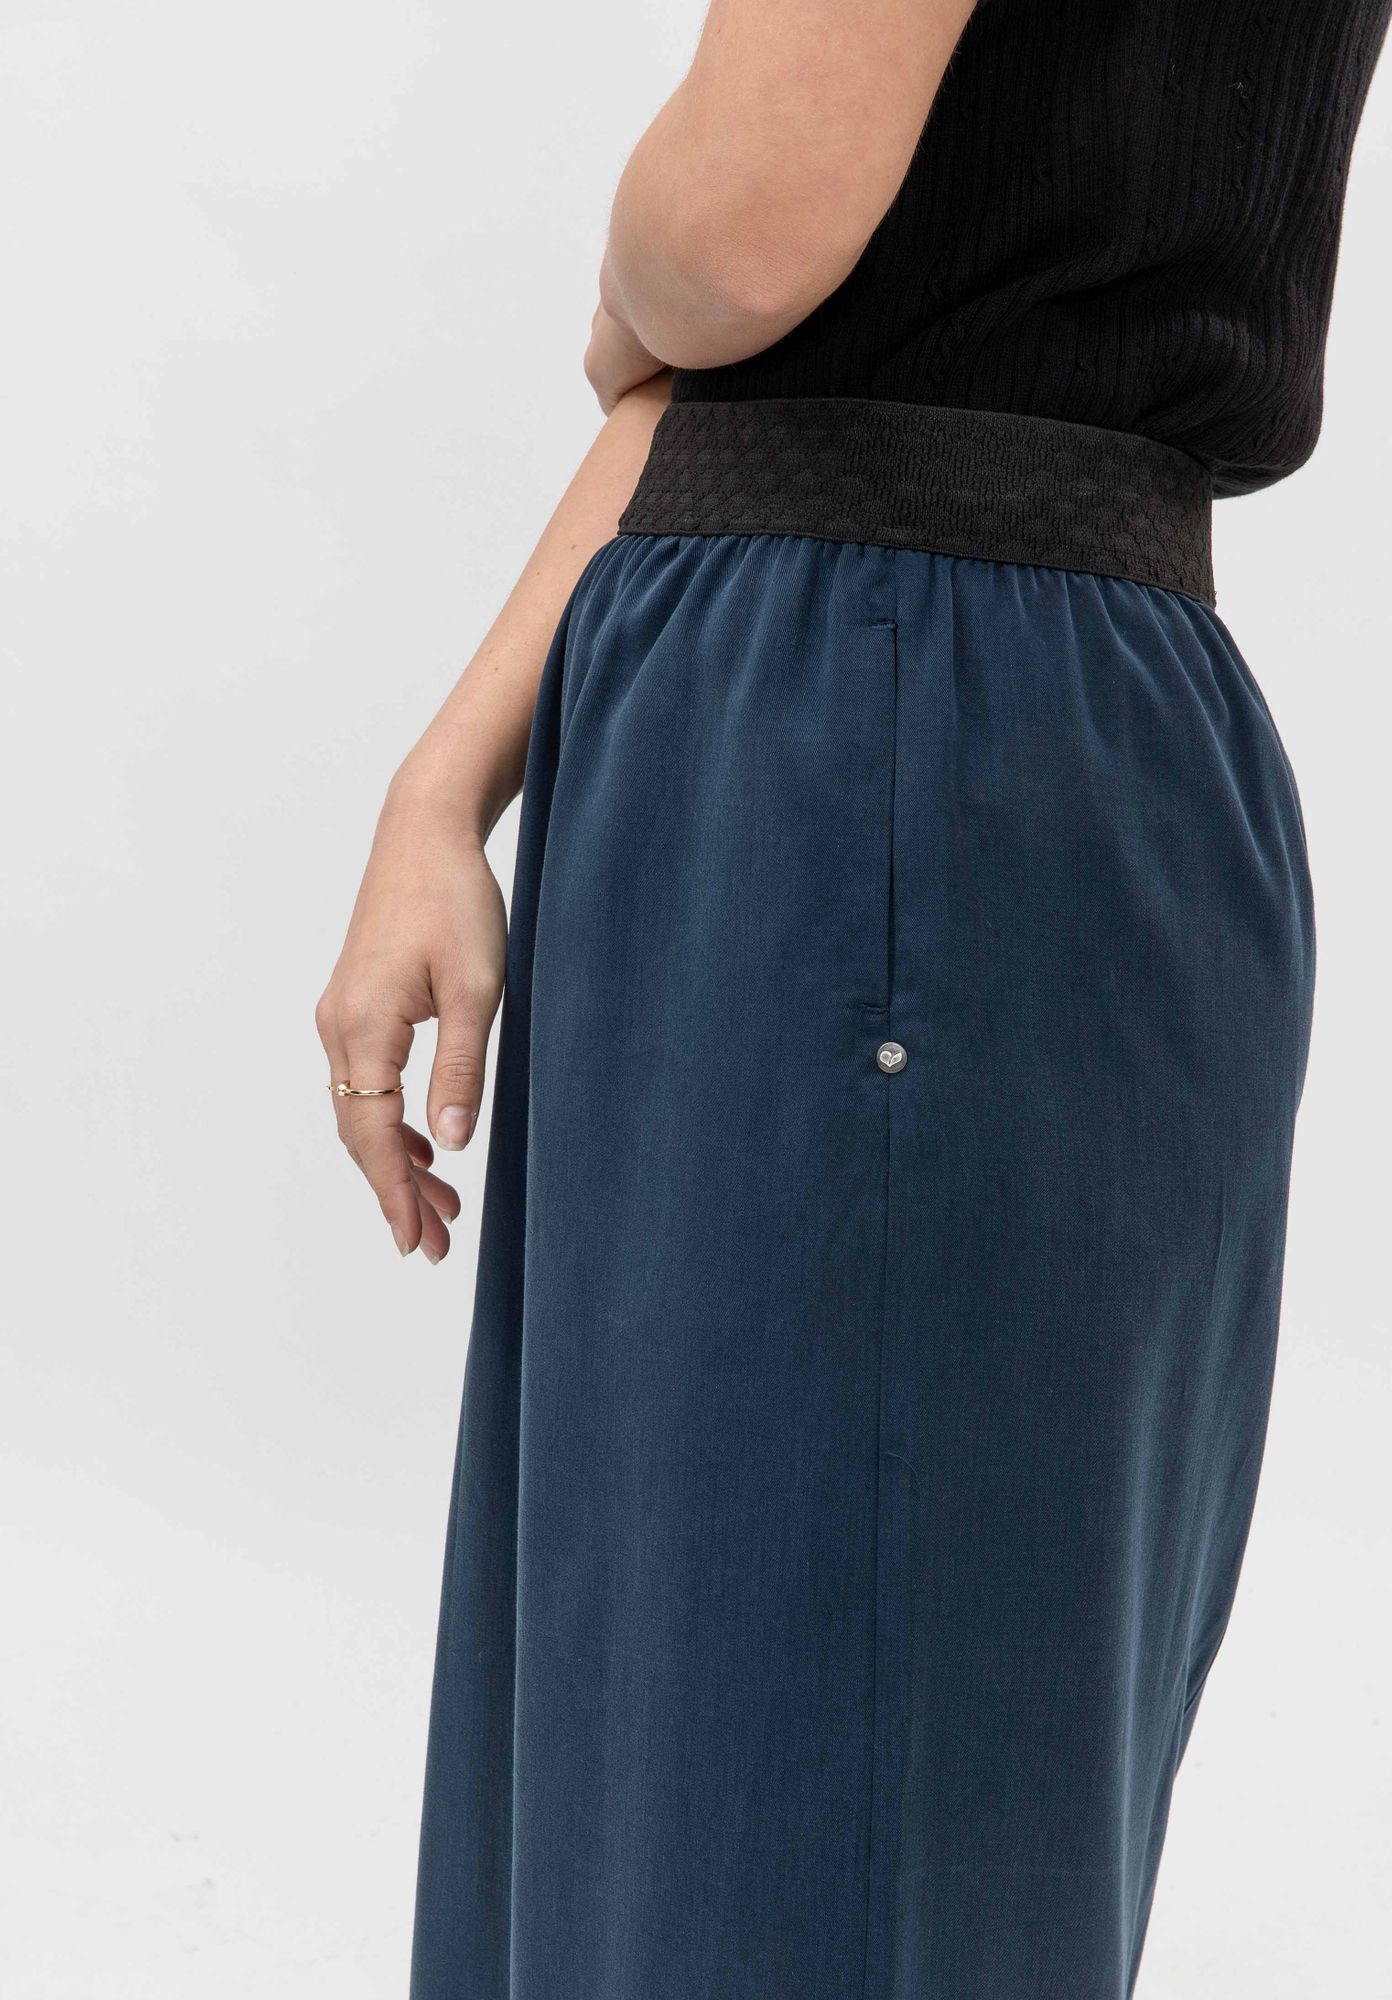 Skirt HIMANKA in gray blue by LOVJOI made of TENCEL™